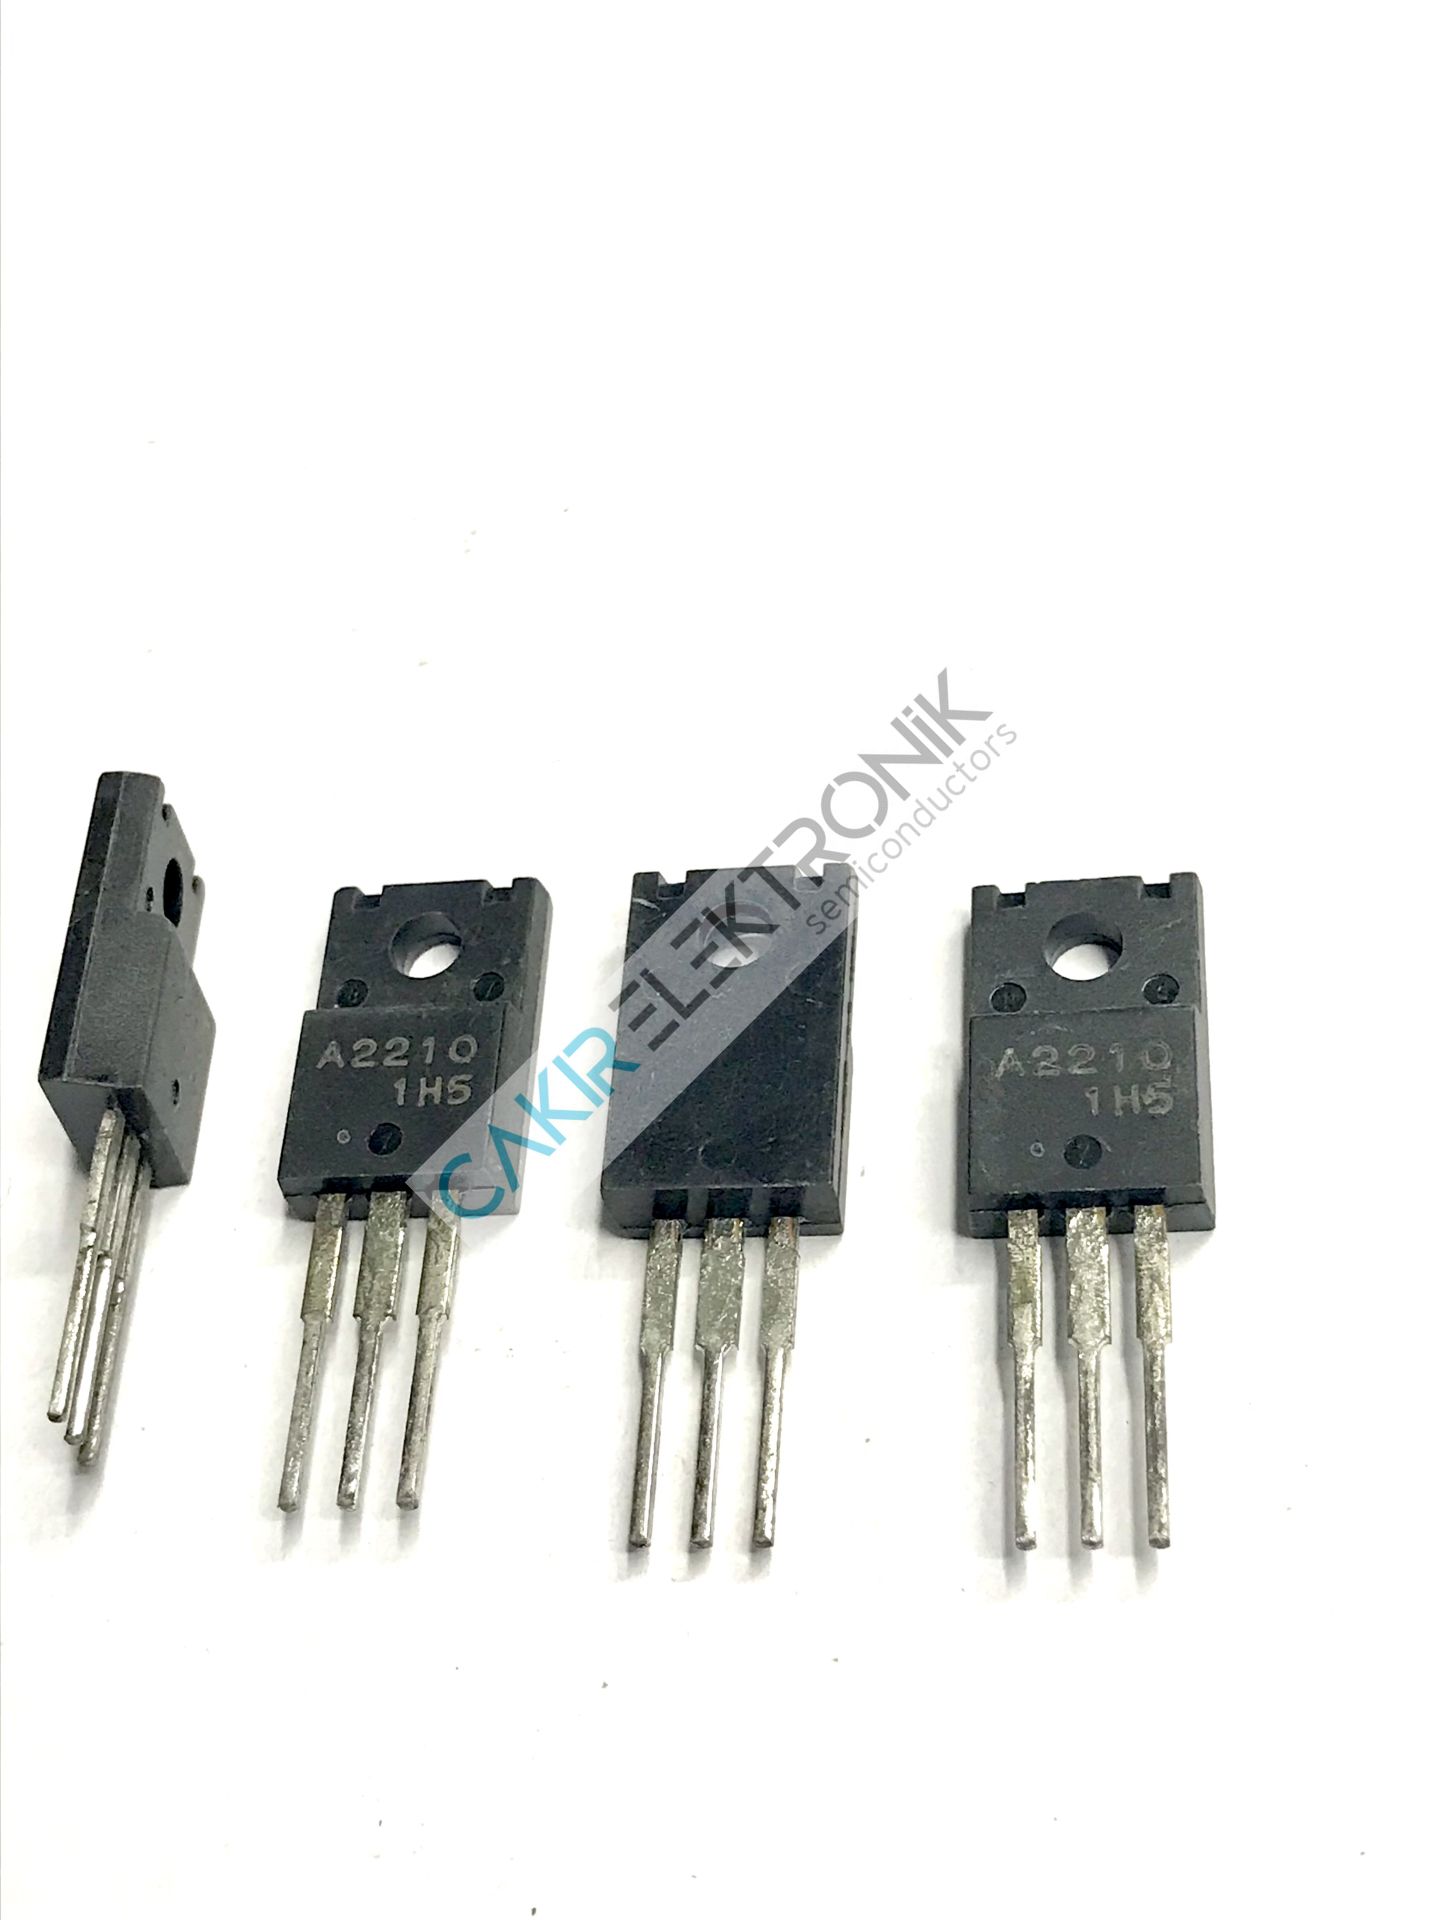 A2210 - 2SA2210     Bipolar Transistor -50V, -20A, Low VCE(sat) PNP TO-220F-3SG